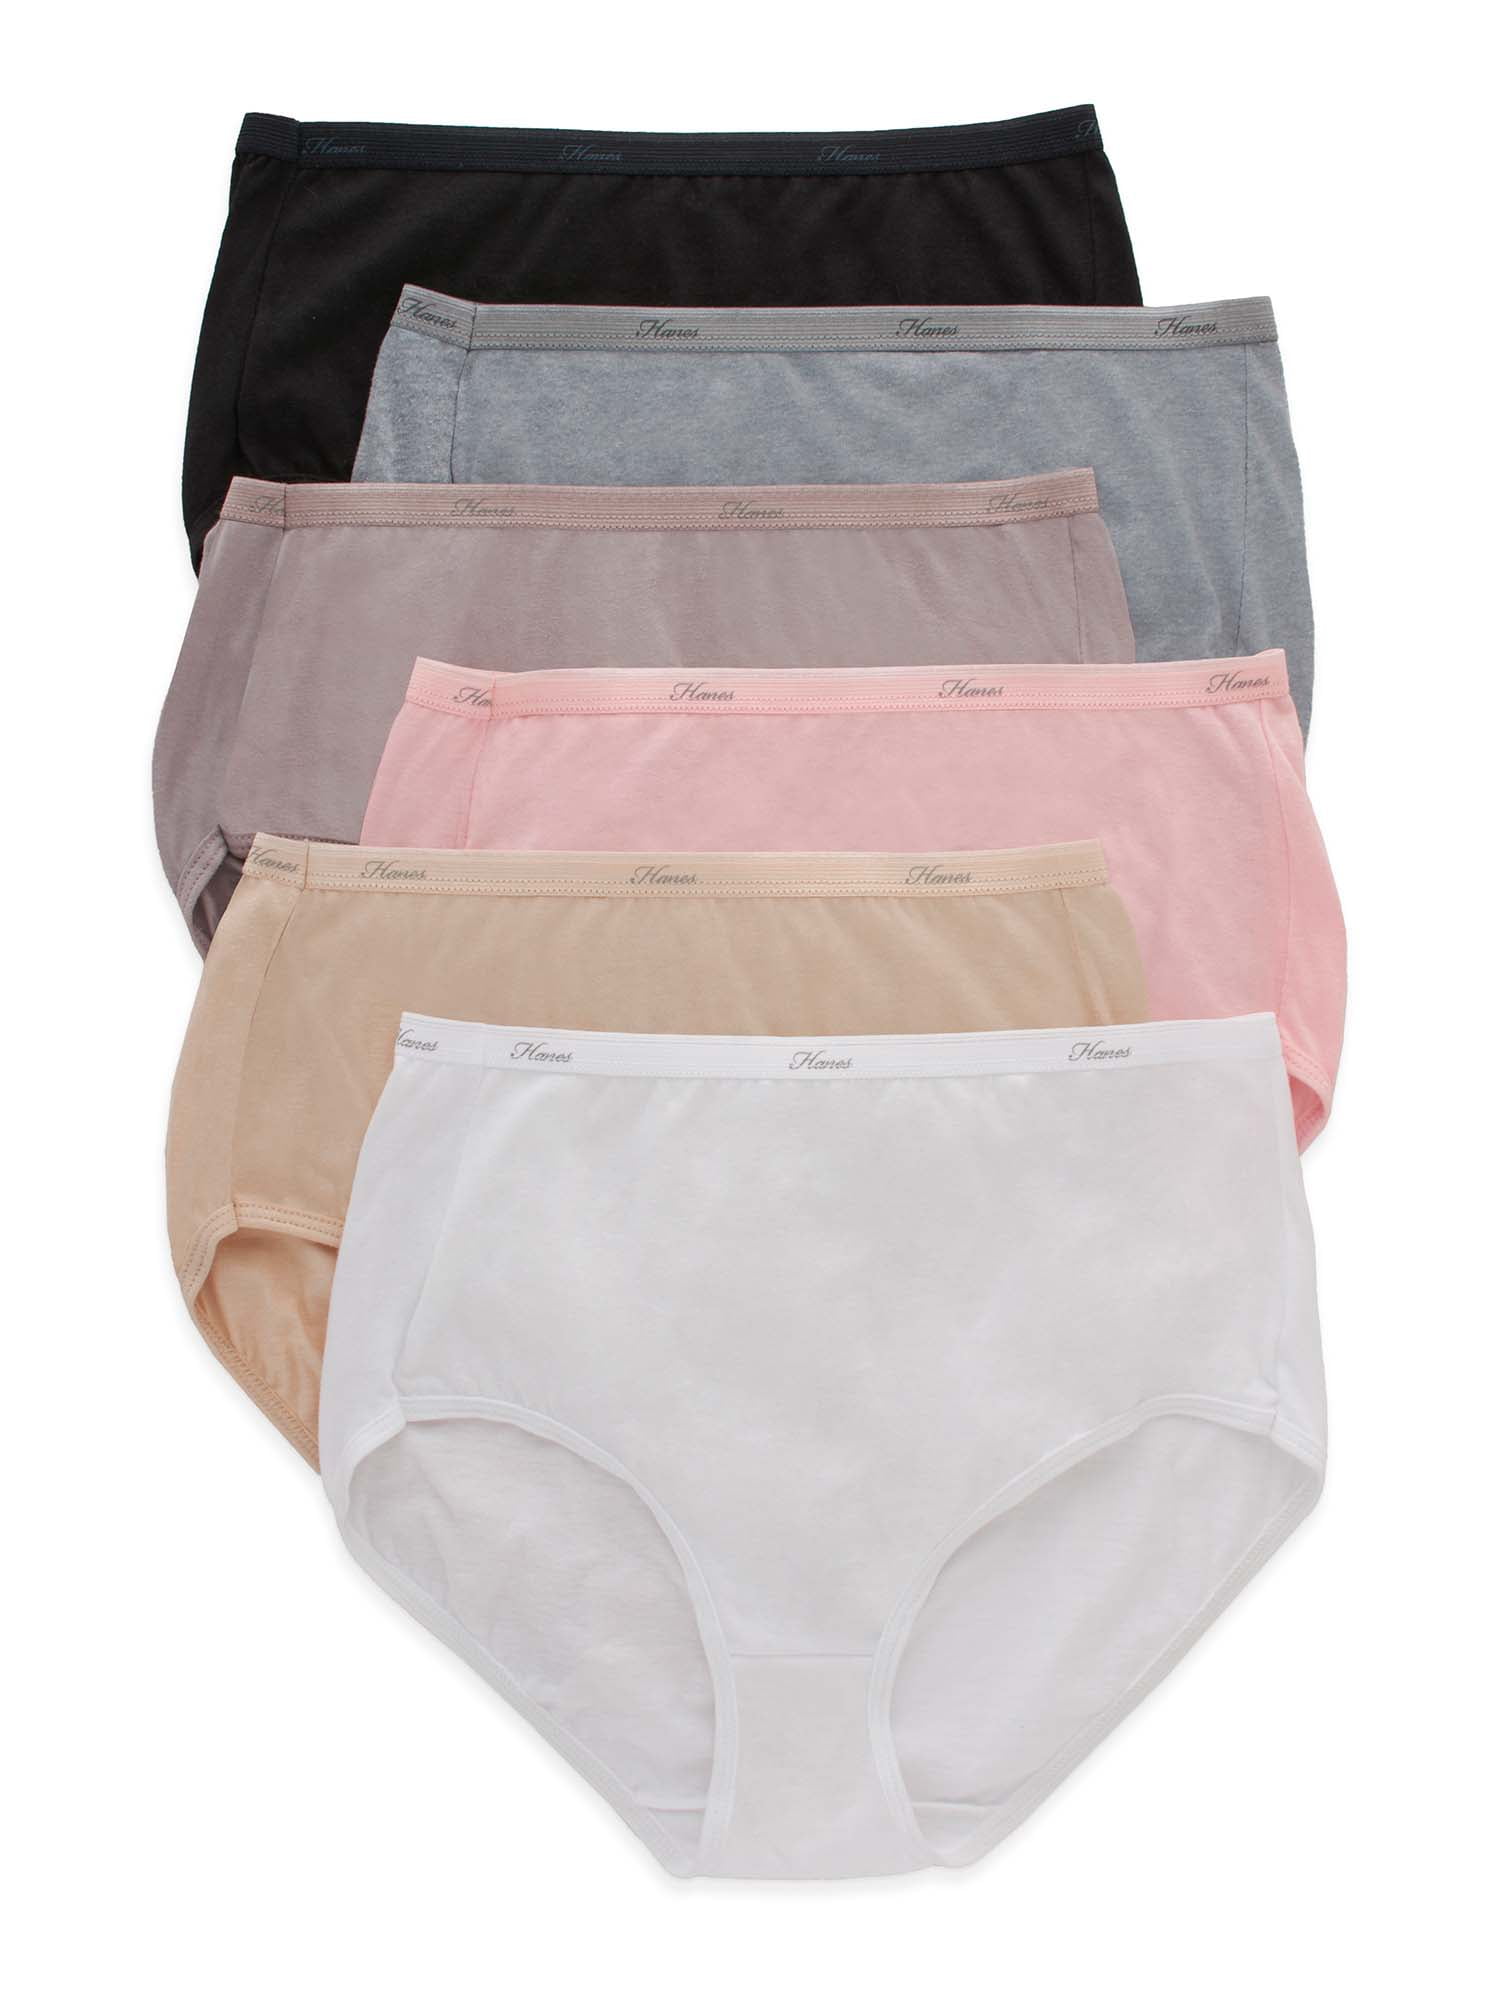 Buy lingerie panties kon Online in Burundi at Low Prices at desertcart